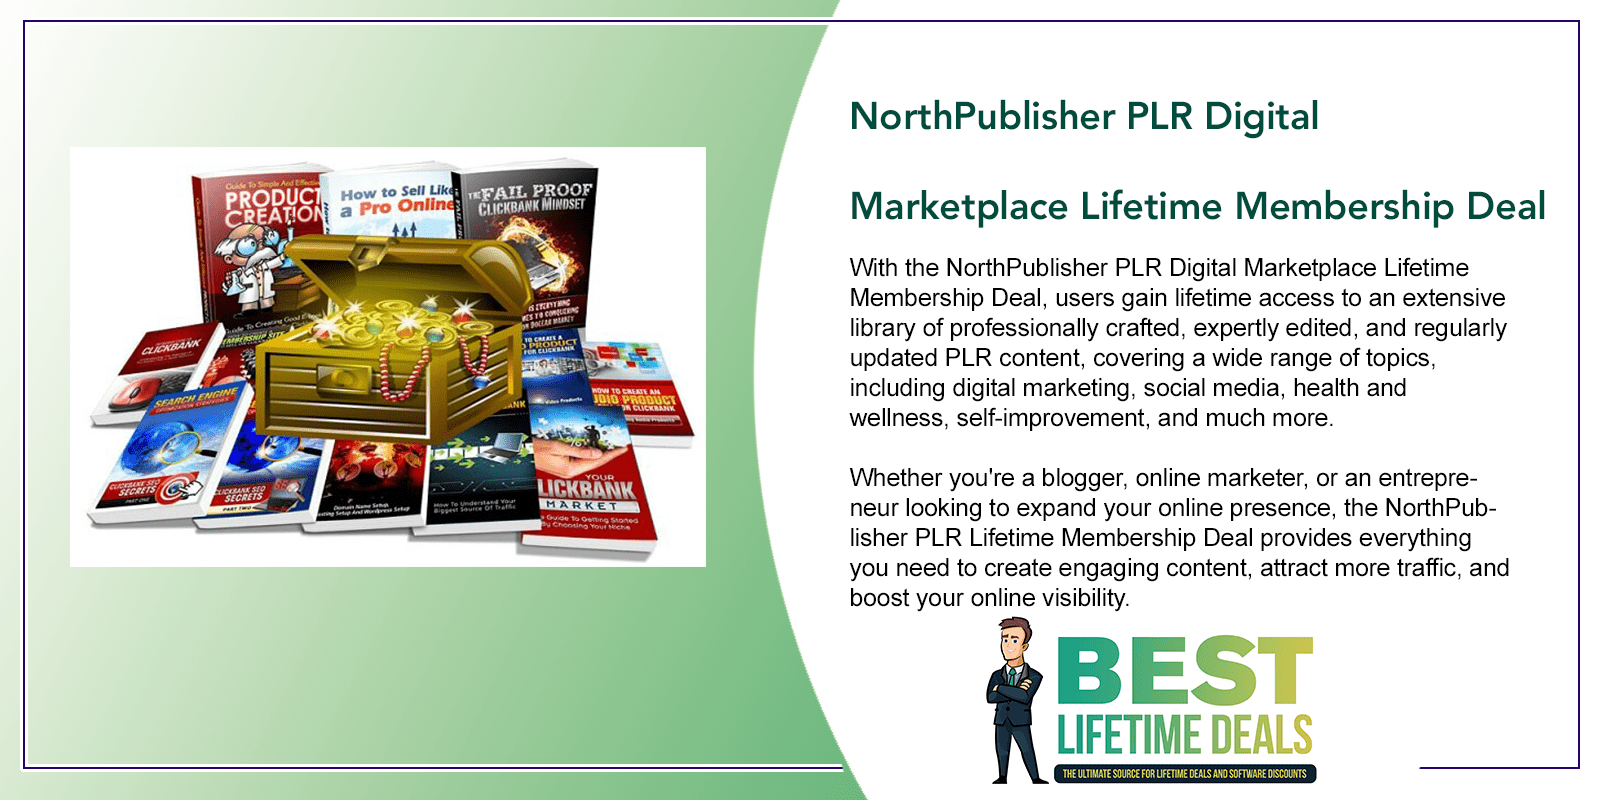 NorthPublisher PLR Digital Marketplace Lifetime Membership Deal Featured Image